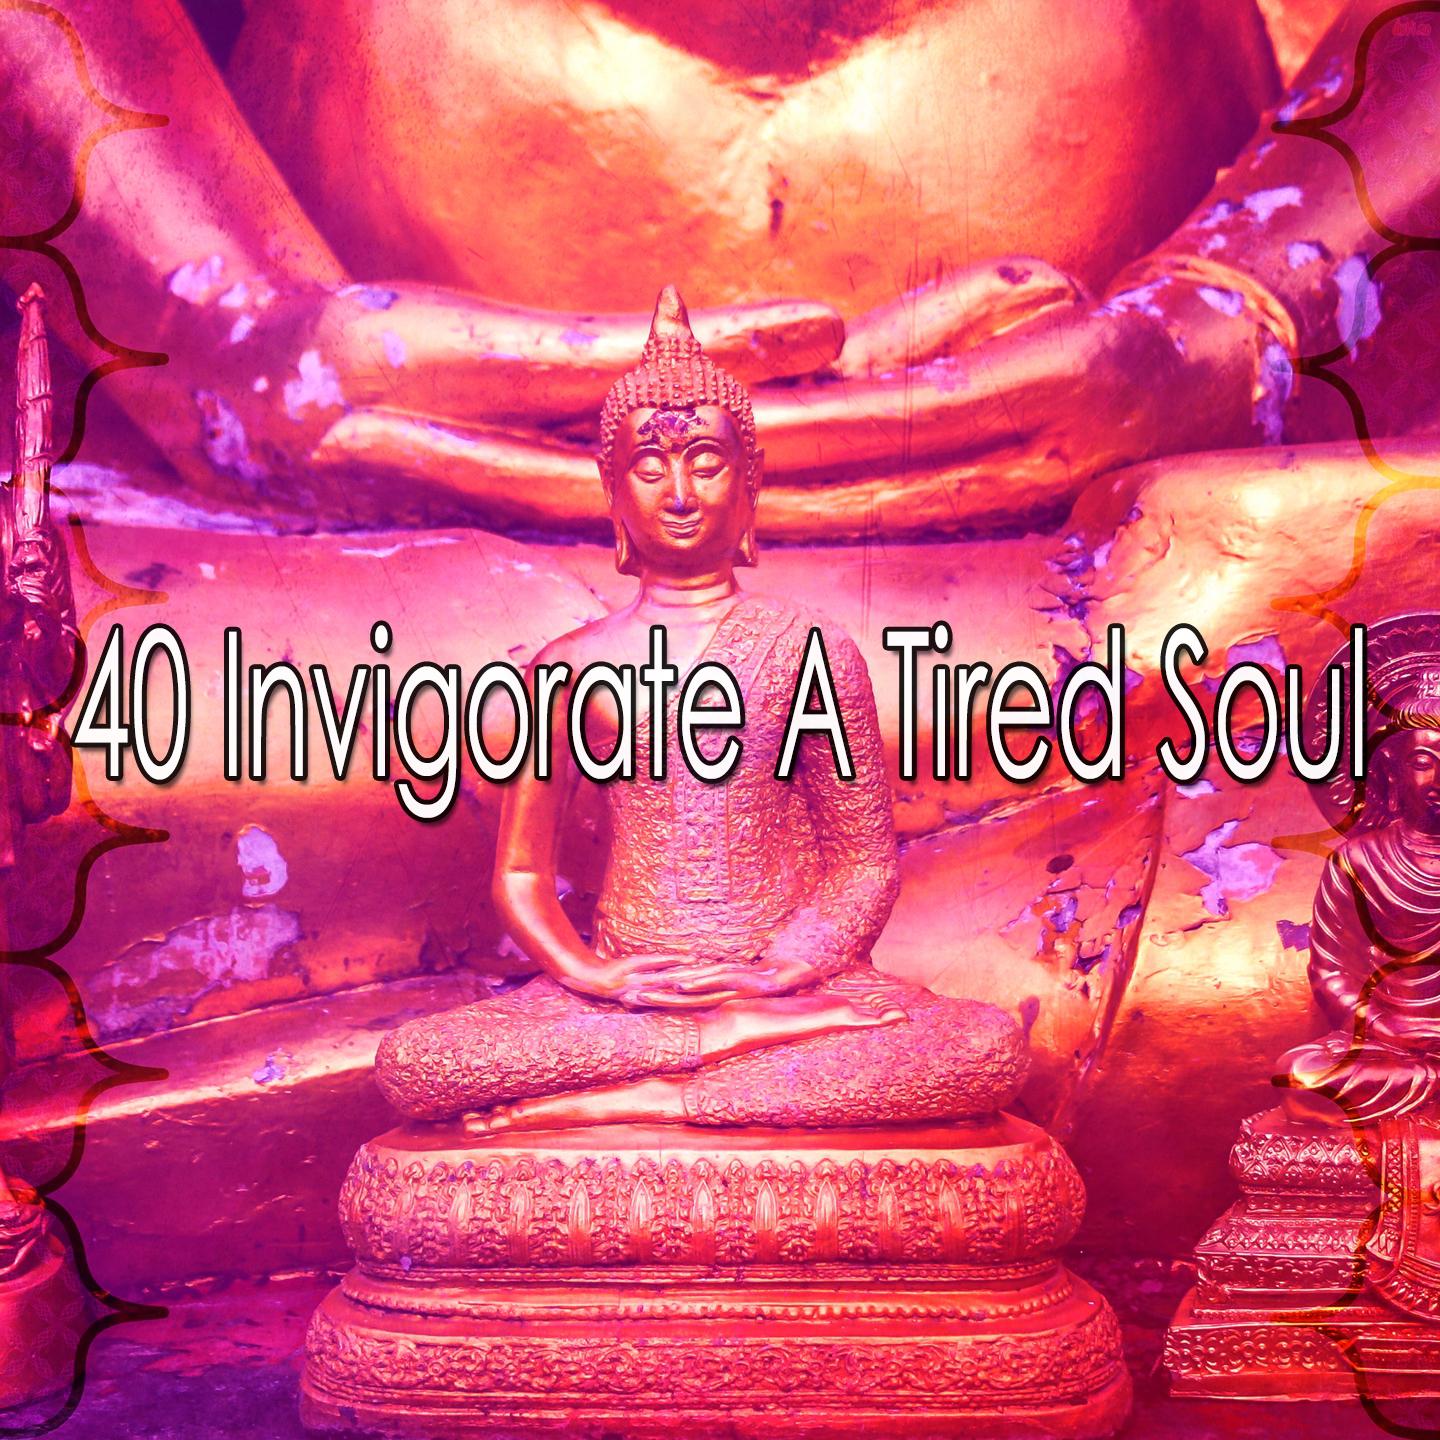 40 Invigorate a Tired Soul